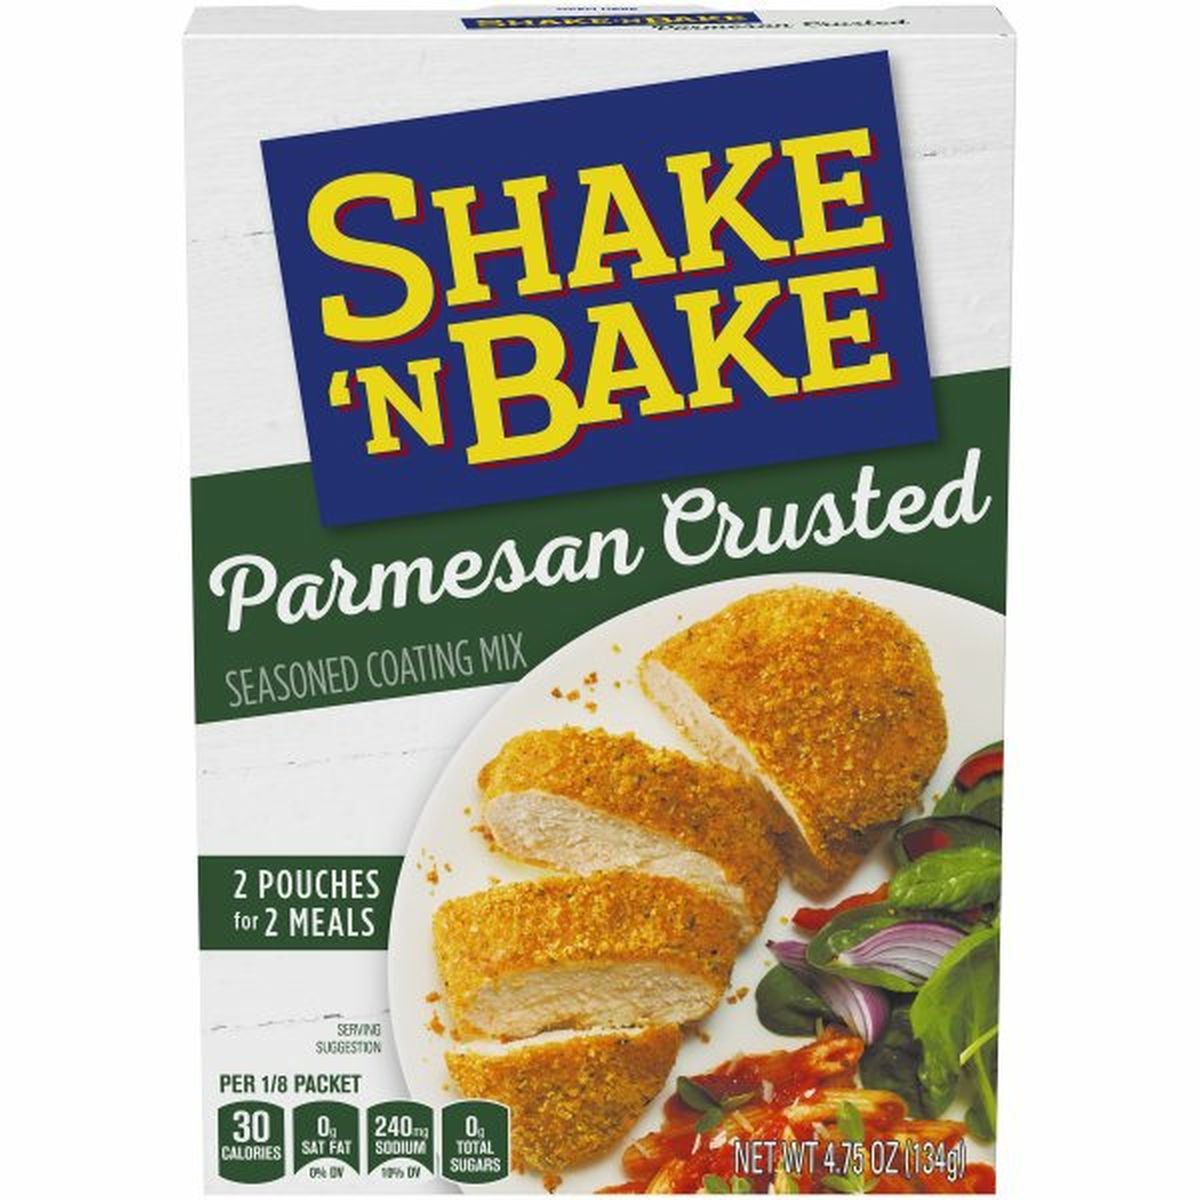 Calories in Shake 'N Bake Seasoned Coating Mix, Parmesan Crusted